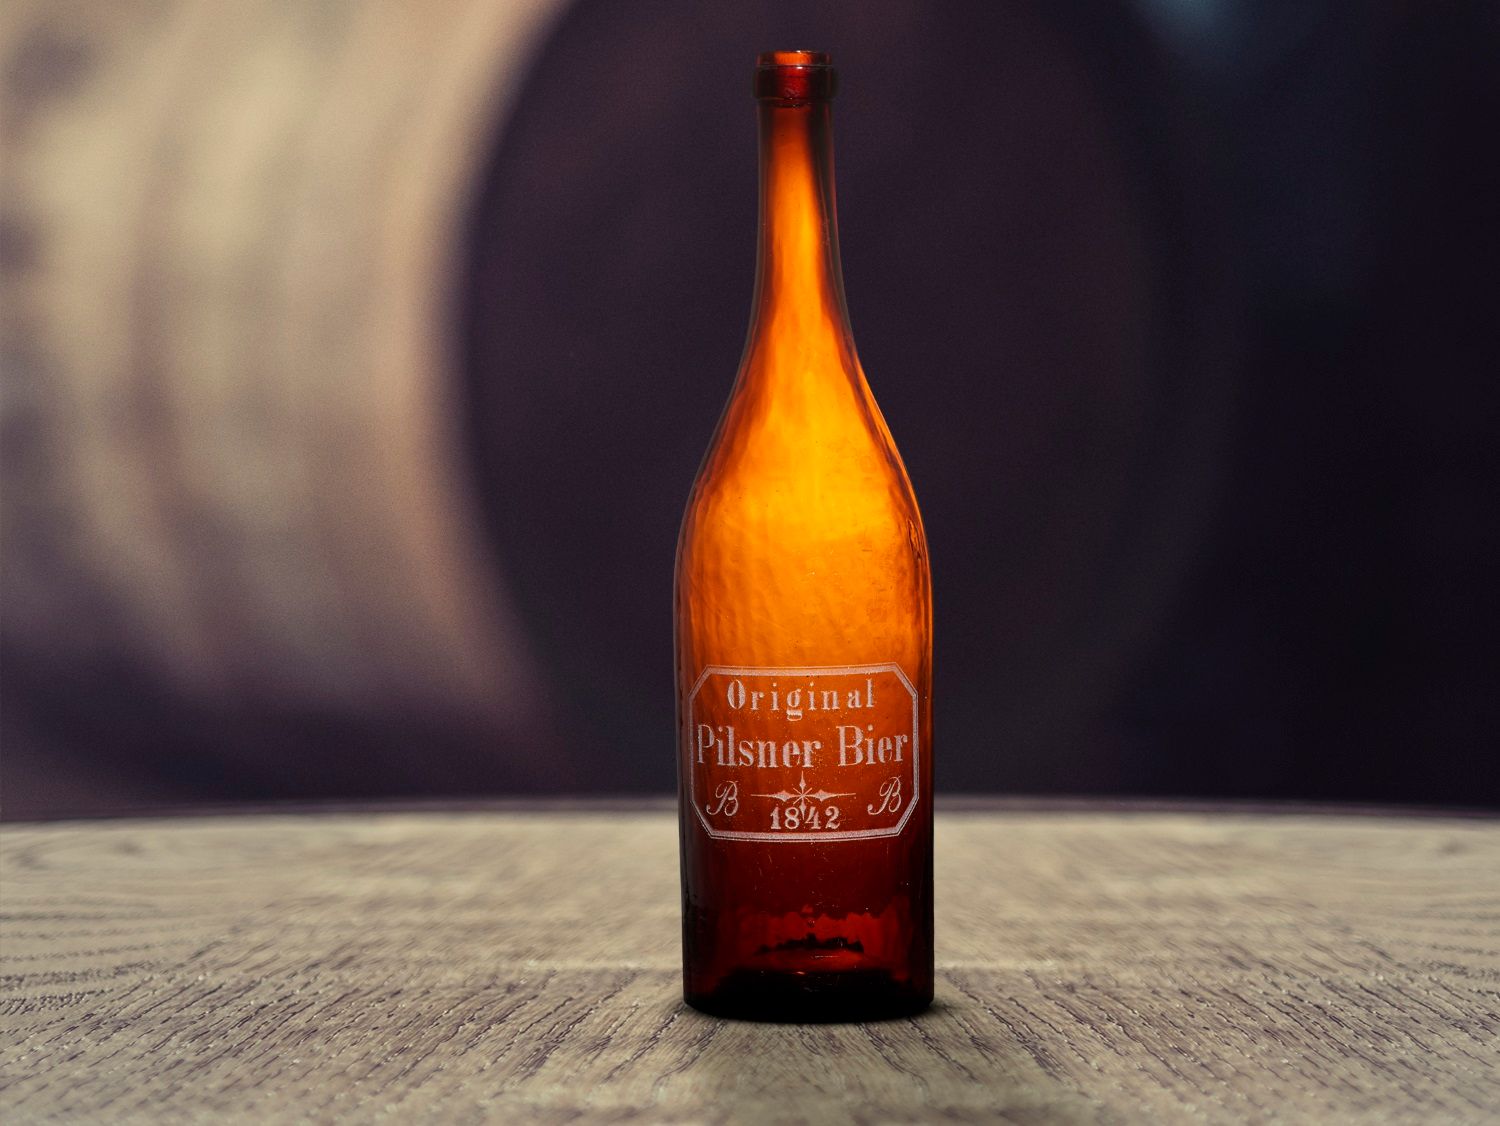 Pilsner Urquell skleněná lahev 1896 s trvalou etiketou